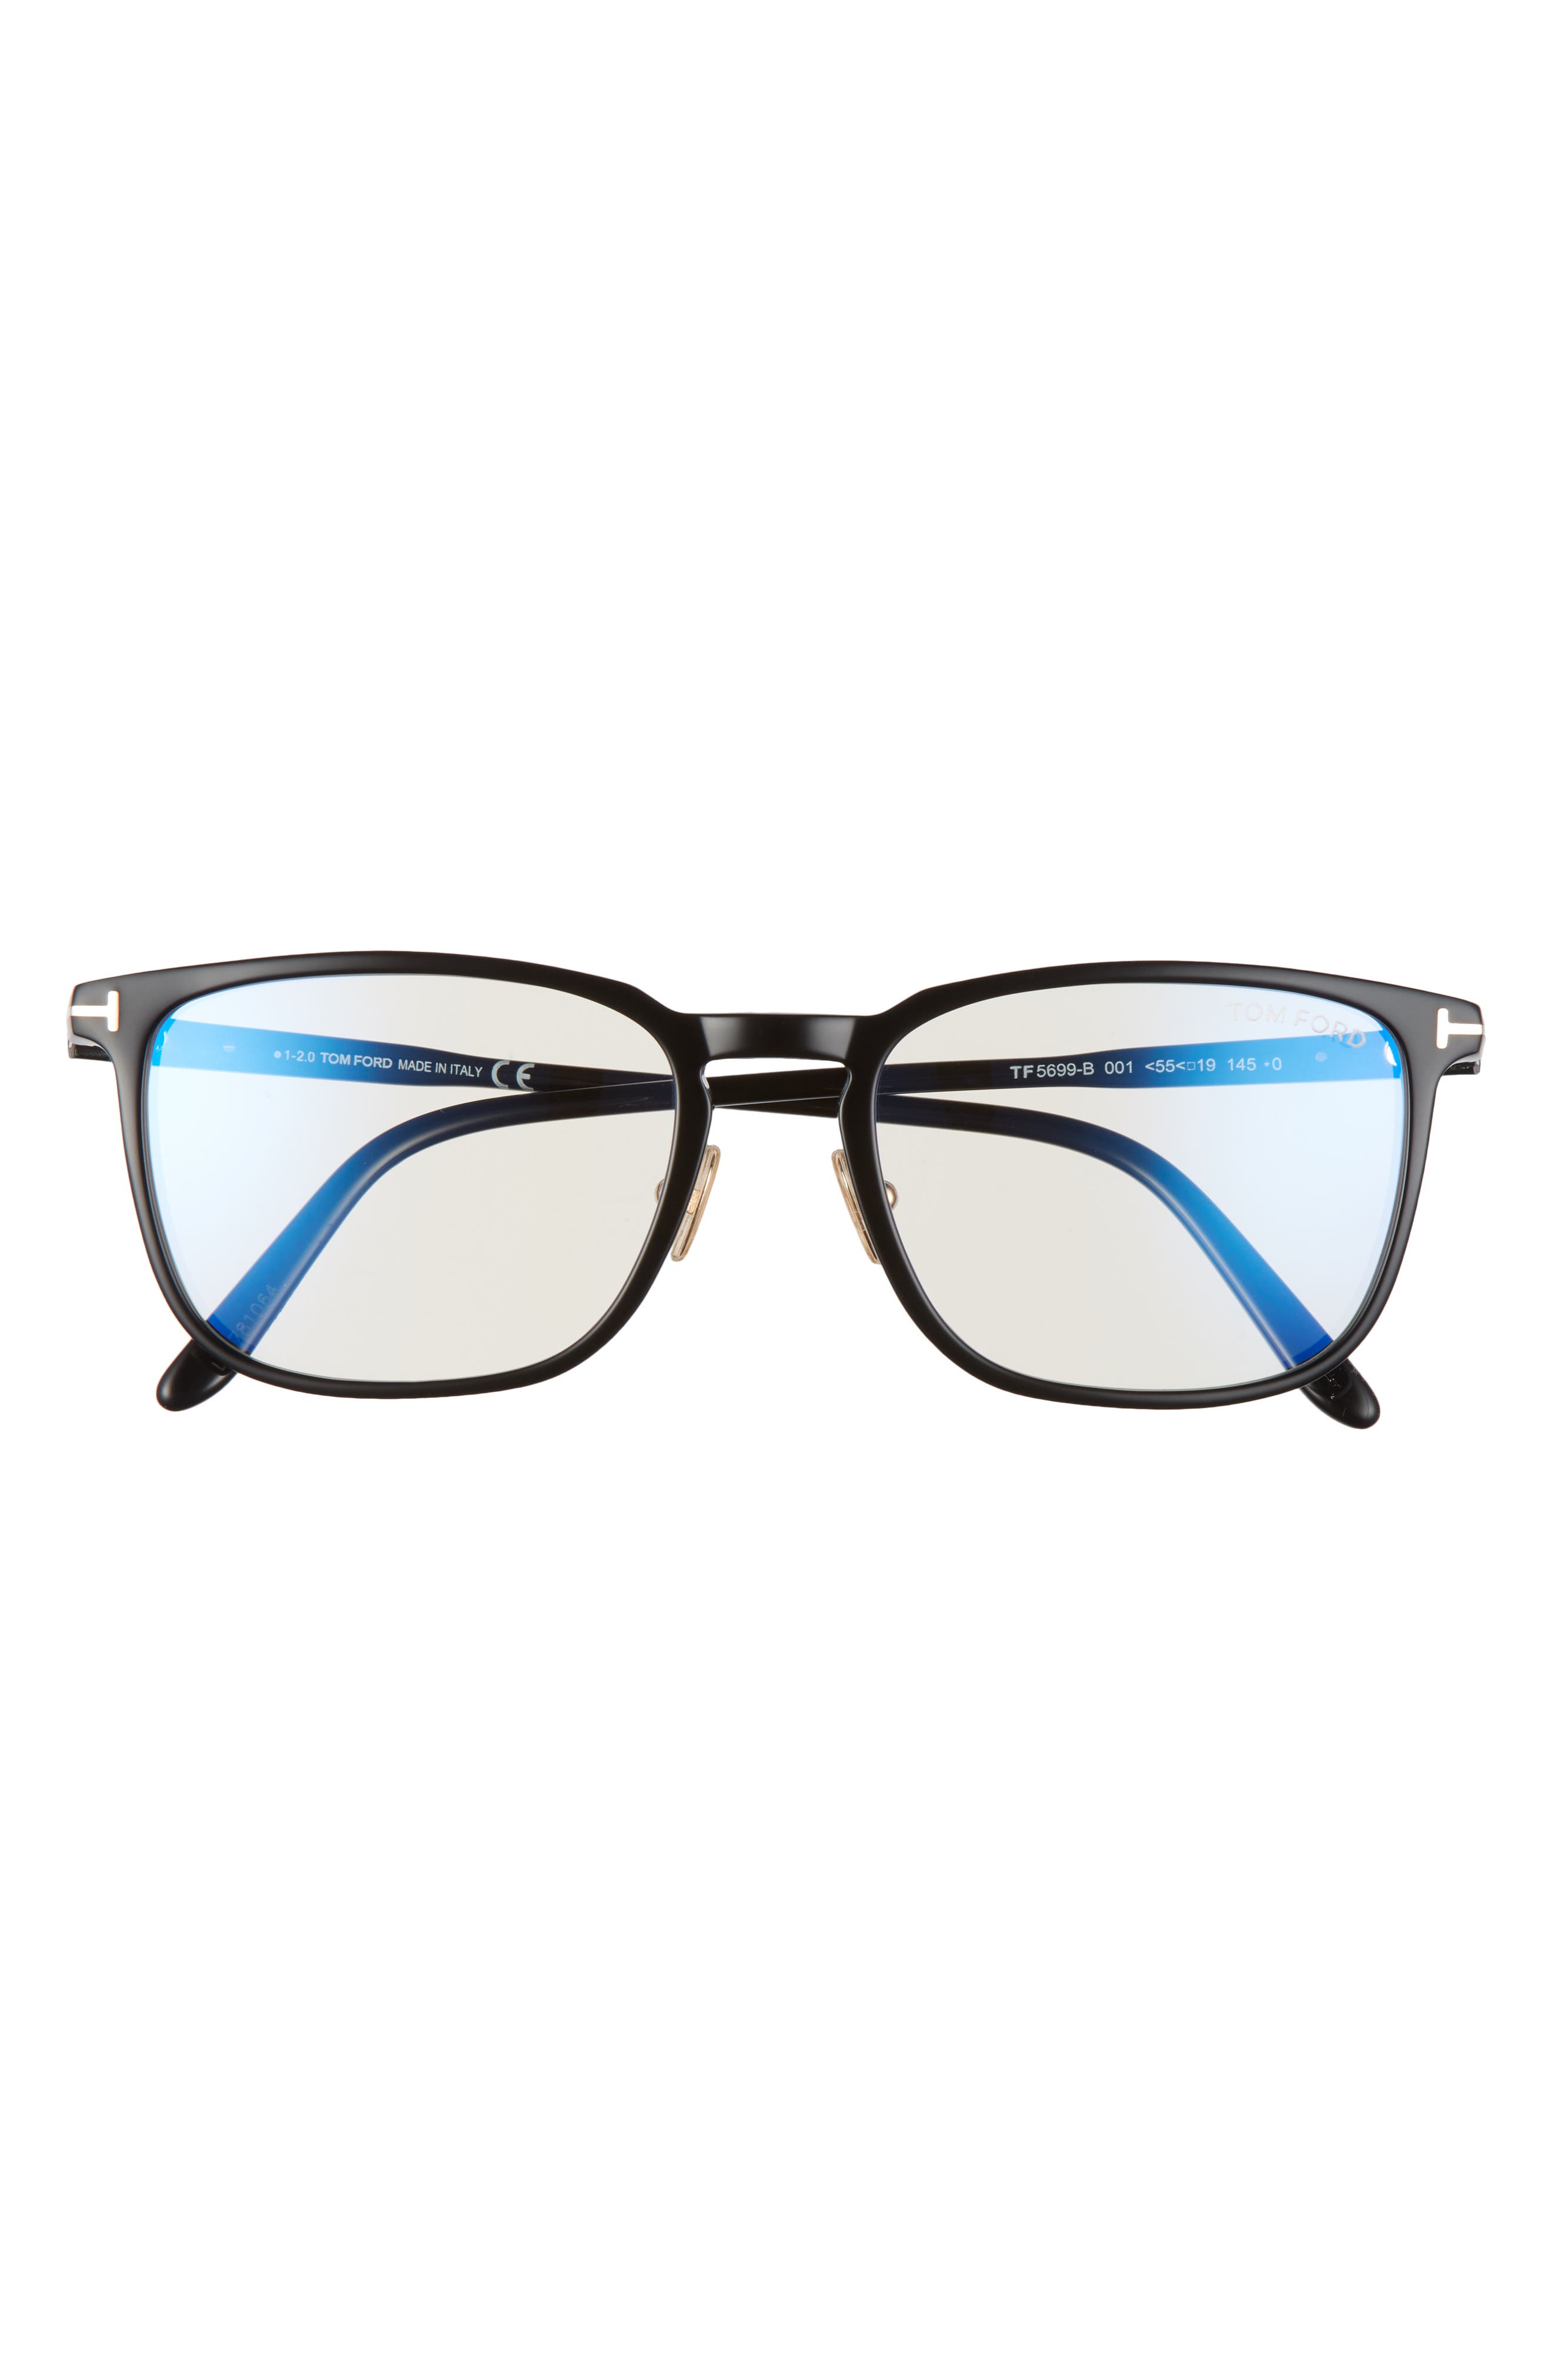 TOM FORD 55mm Square Blue Light Blocking Glasses in Shiny Black/Clear Blue  Block | Smart Closet